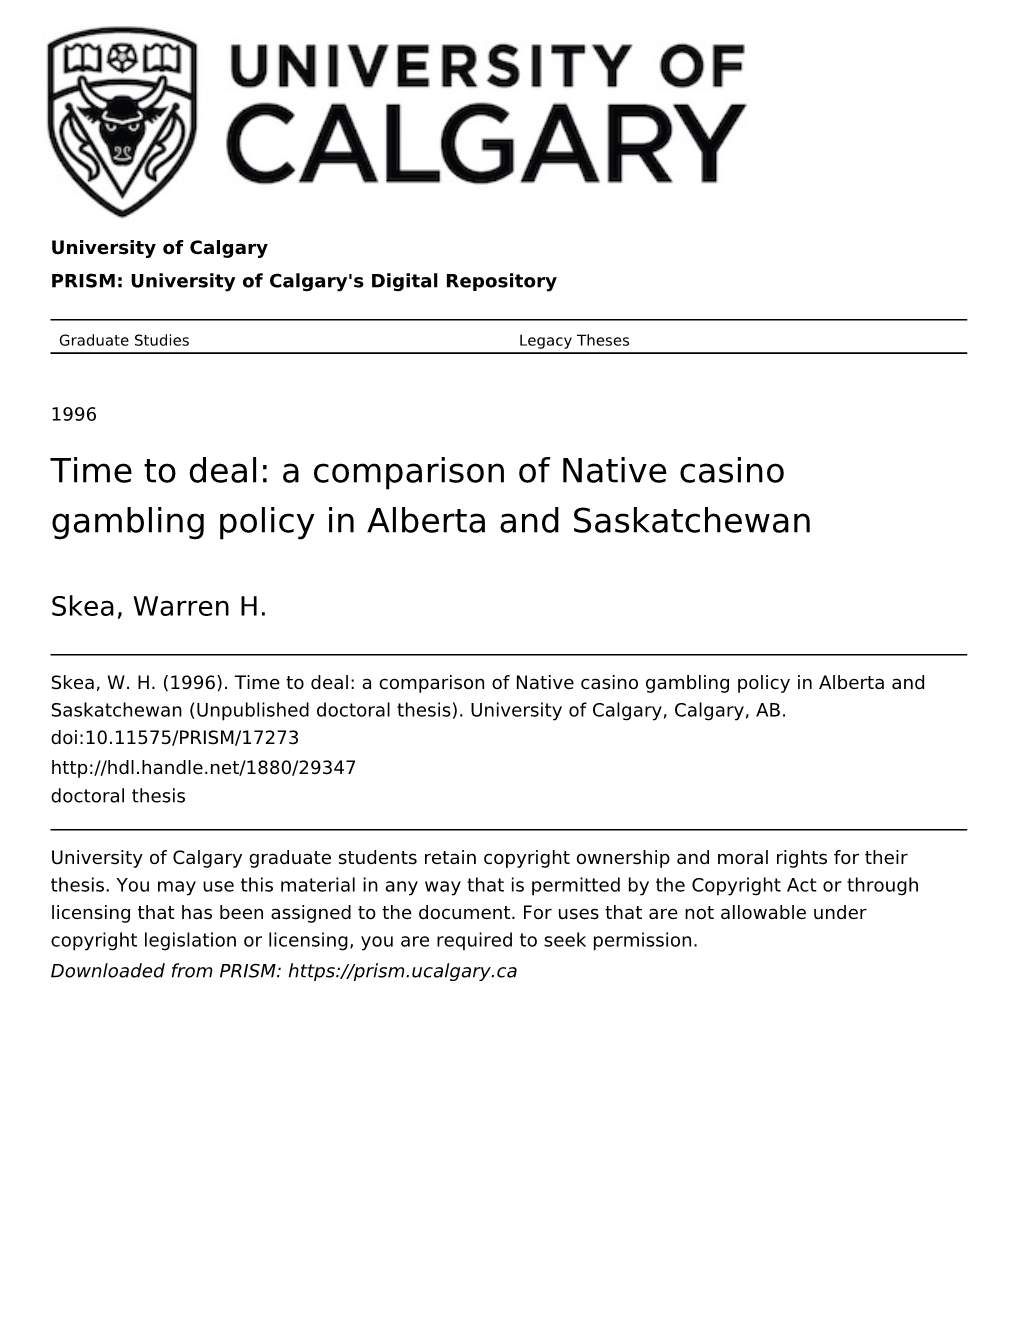 A Comparison of Native Casino Gambling Policy in Alberta and Saskatchewan